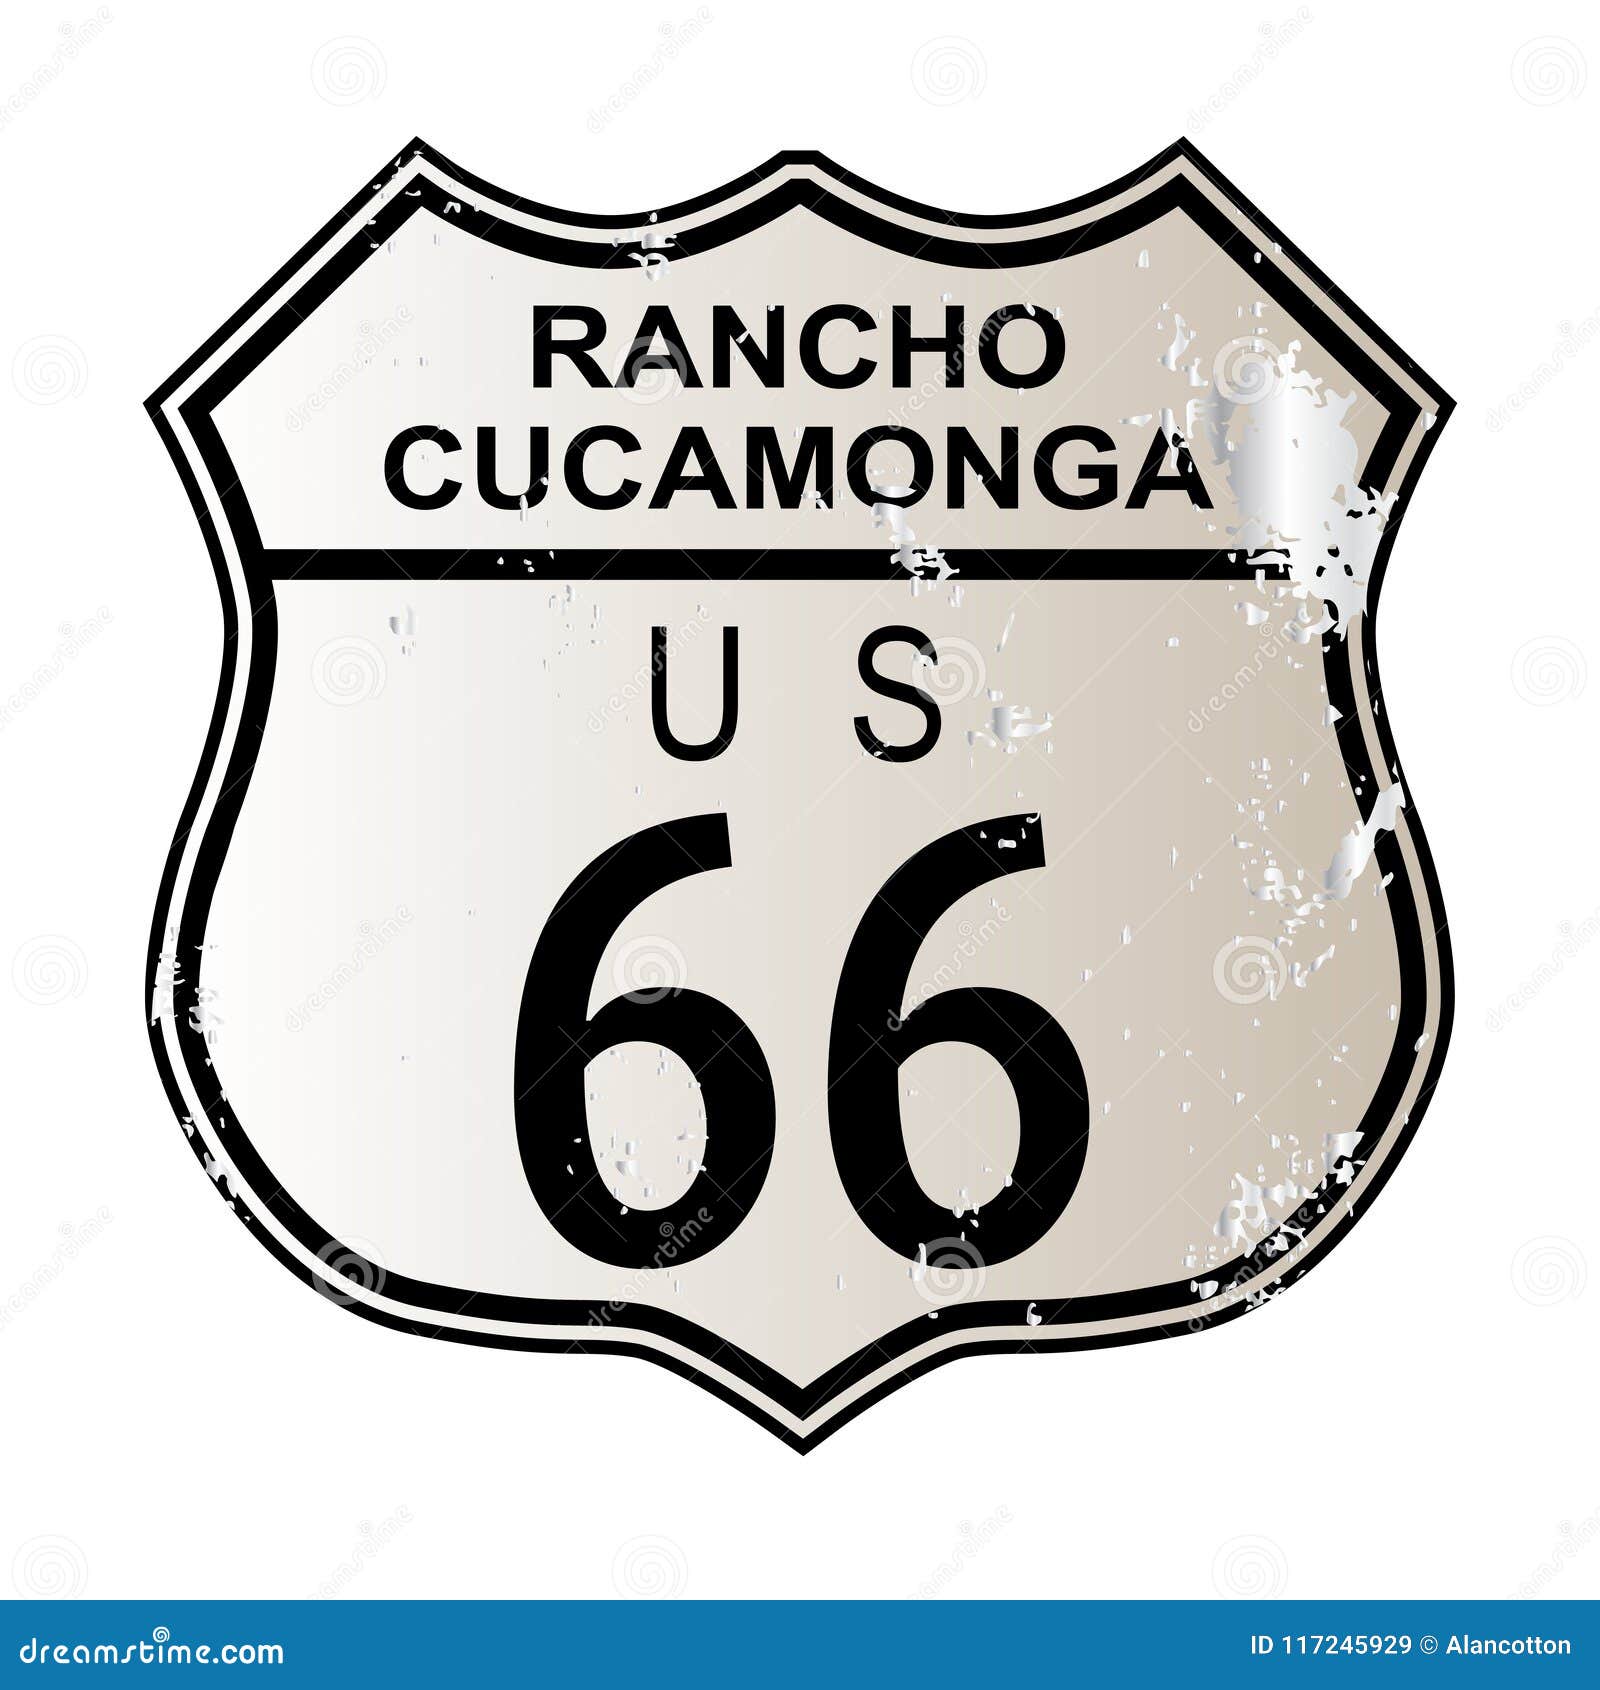 rancho cucamonga route 66